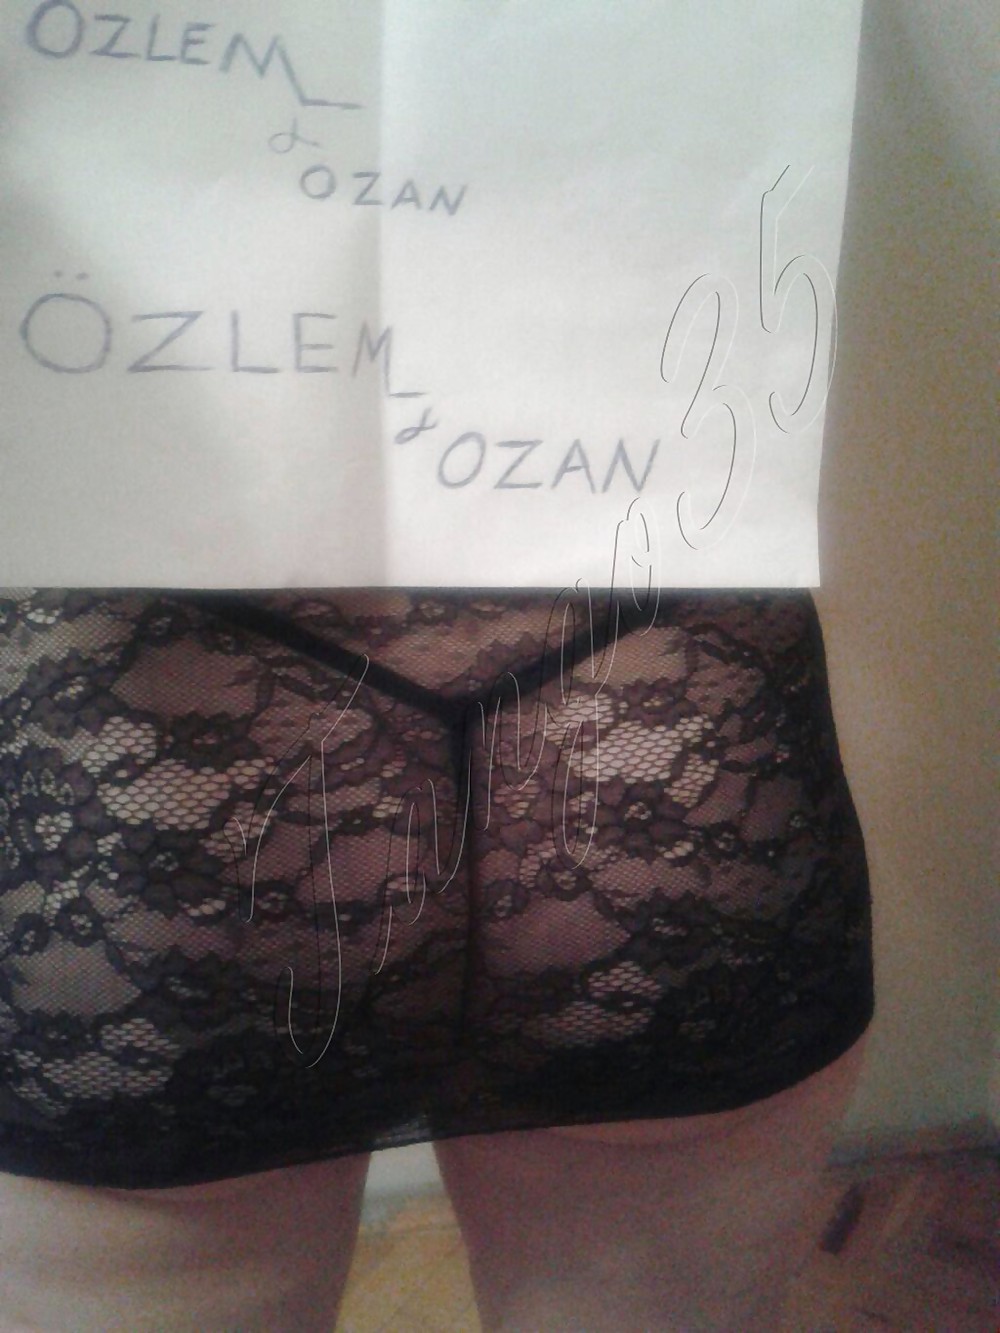 Porn Pics Turkish Couple Ozlem&Ozan